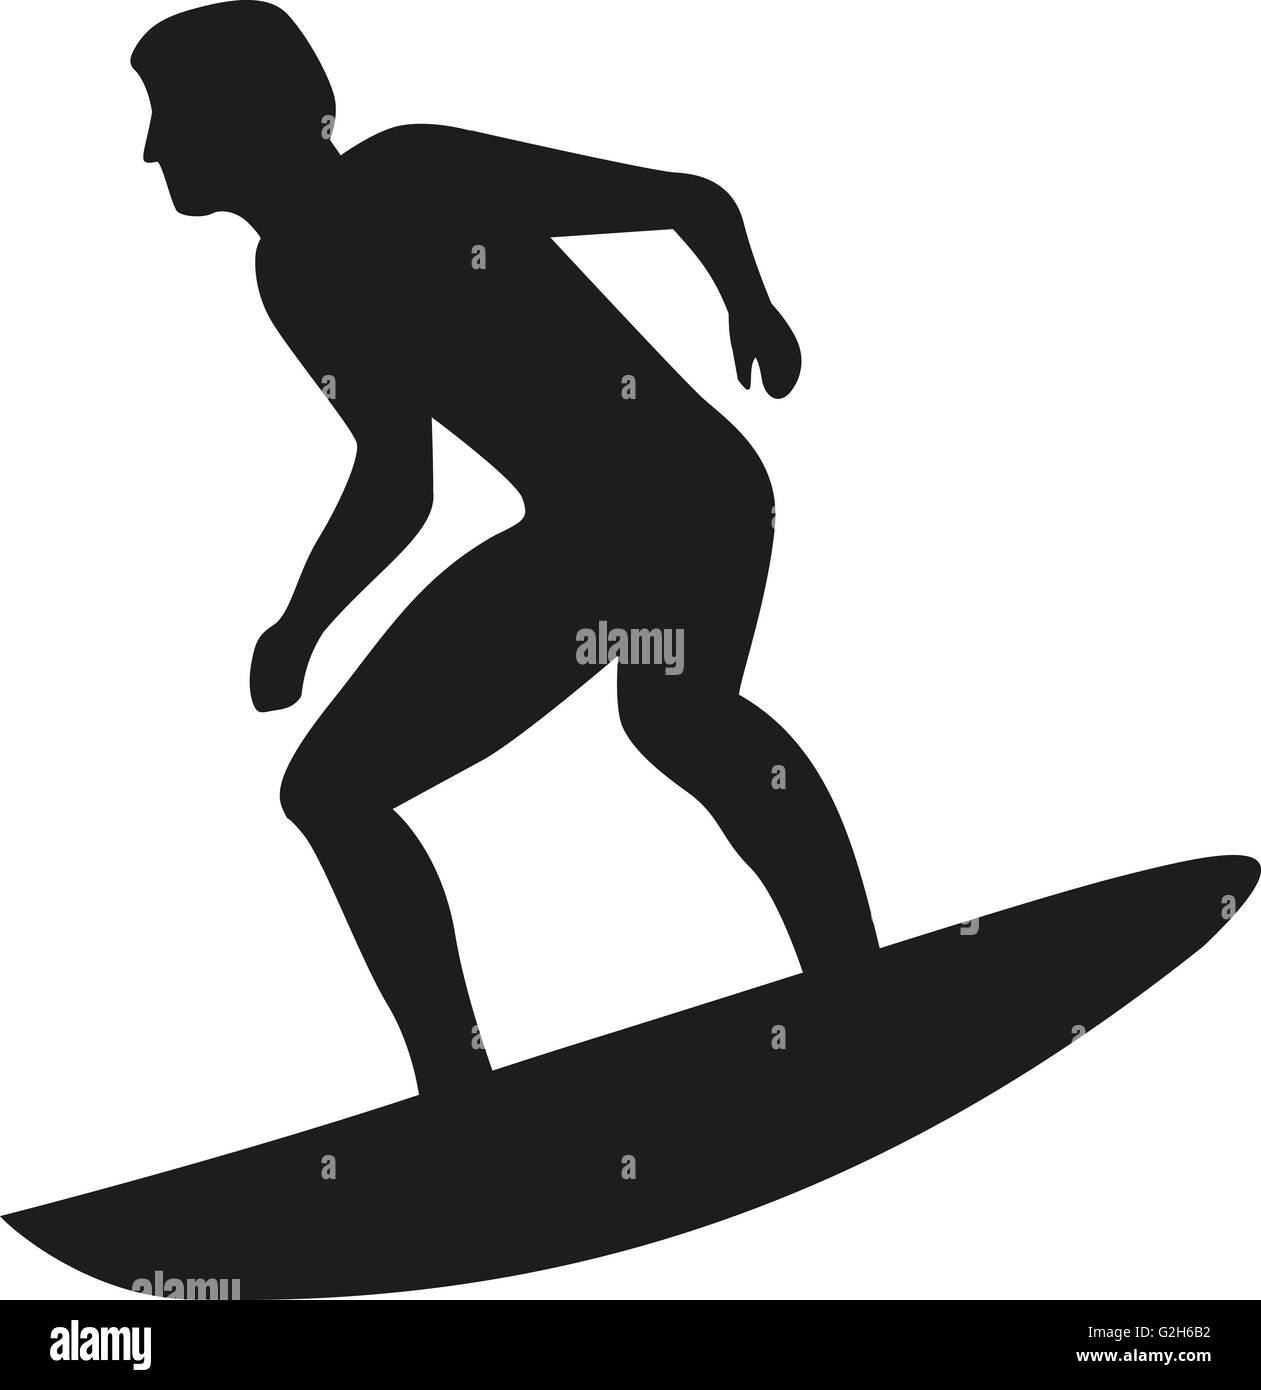 Surfer silhouette Stock Photo - Alamy